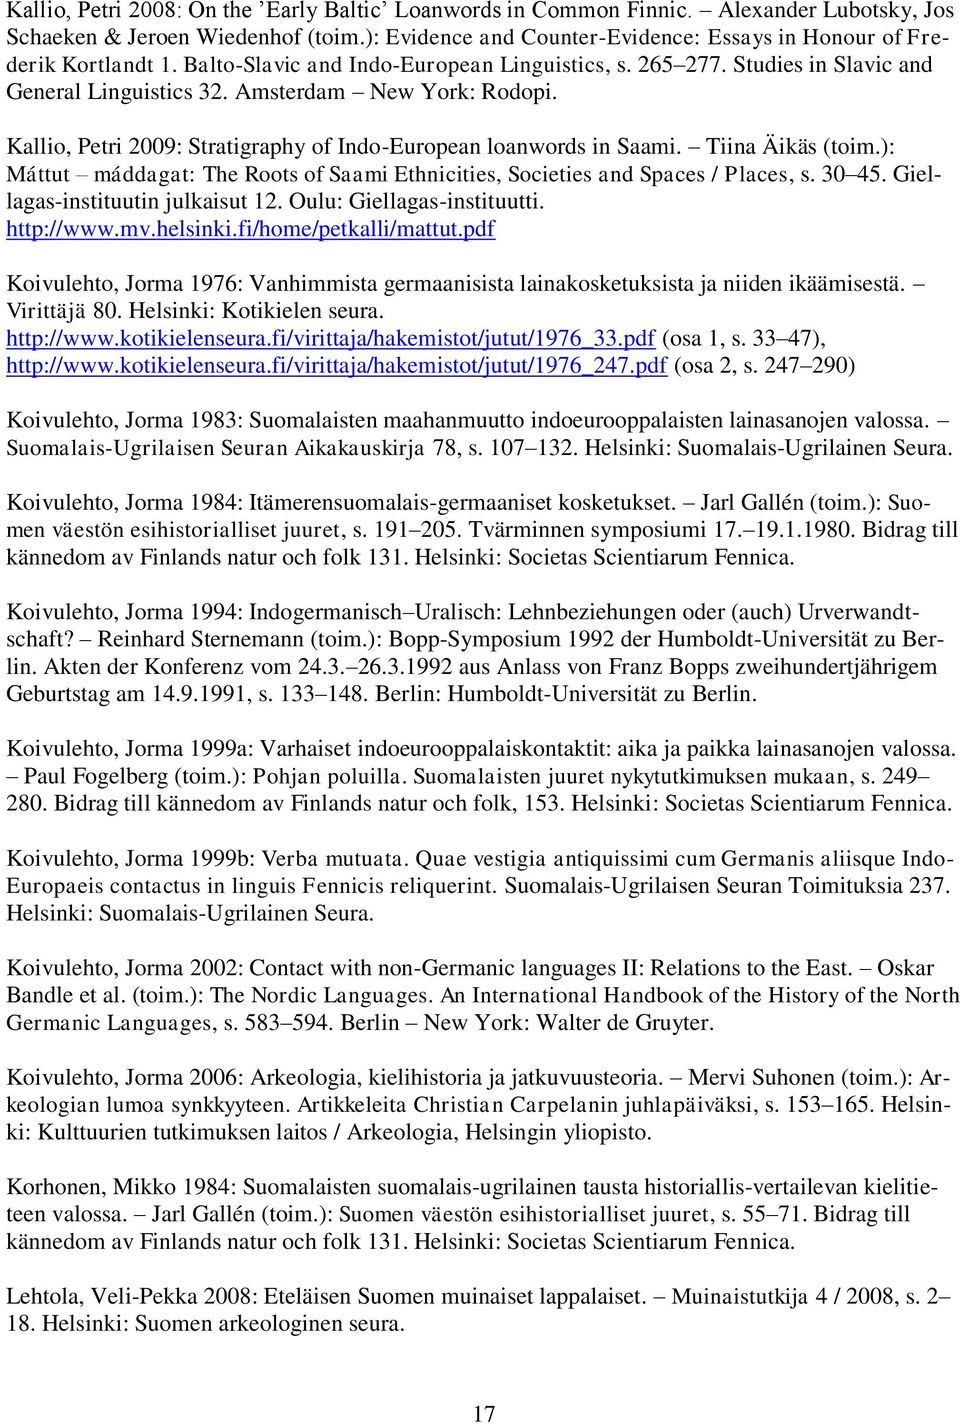 Amsterdam New York: Rodopi. Kallio, Petri 2009: Stratigraphy of Indo-European loanwords in Saami. Tiina Äikäs (toim.